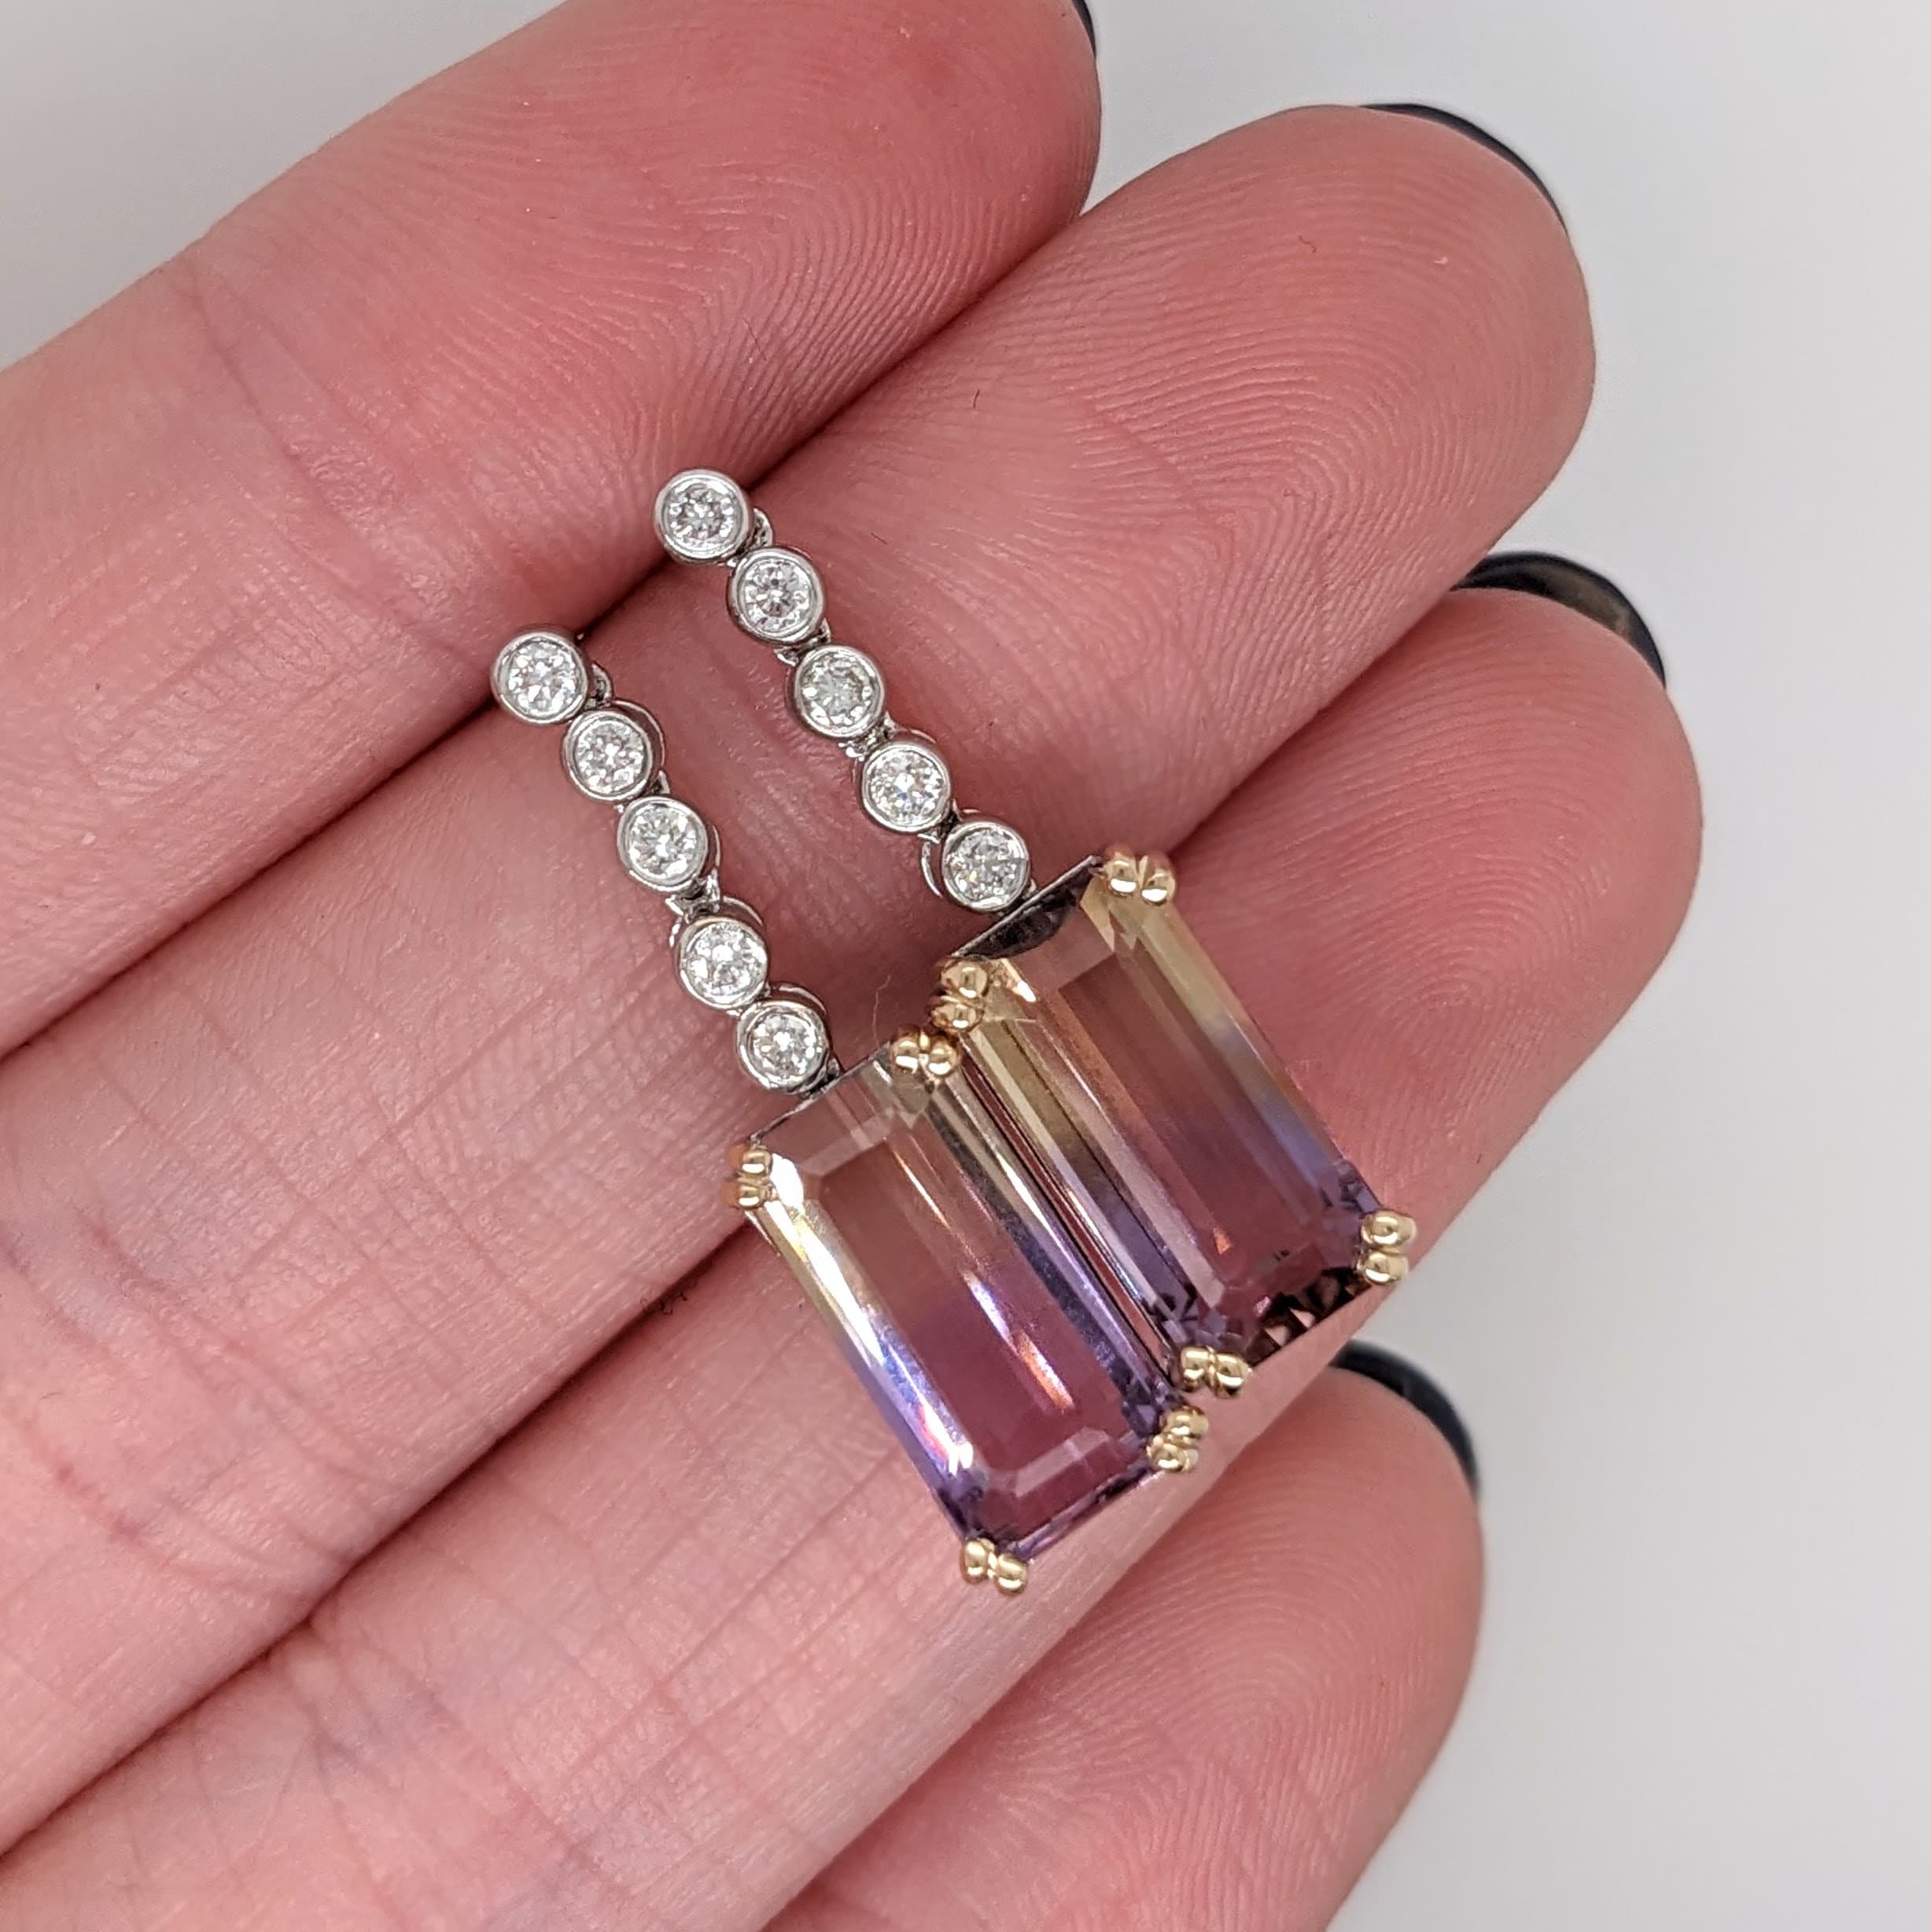 Stunning Ametrine Dangle Earrings in 14K White Gold w Natural Diamond Accents | Emerald Cut 13x6.5mm | Dual Tone Gems | One of a Kind Set